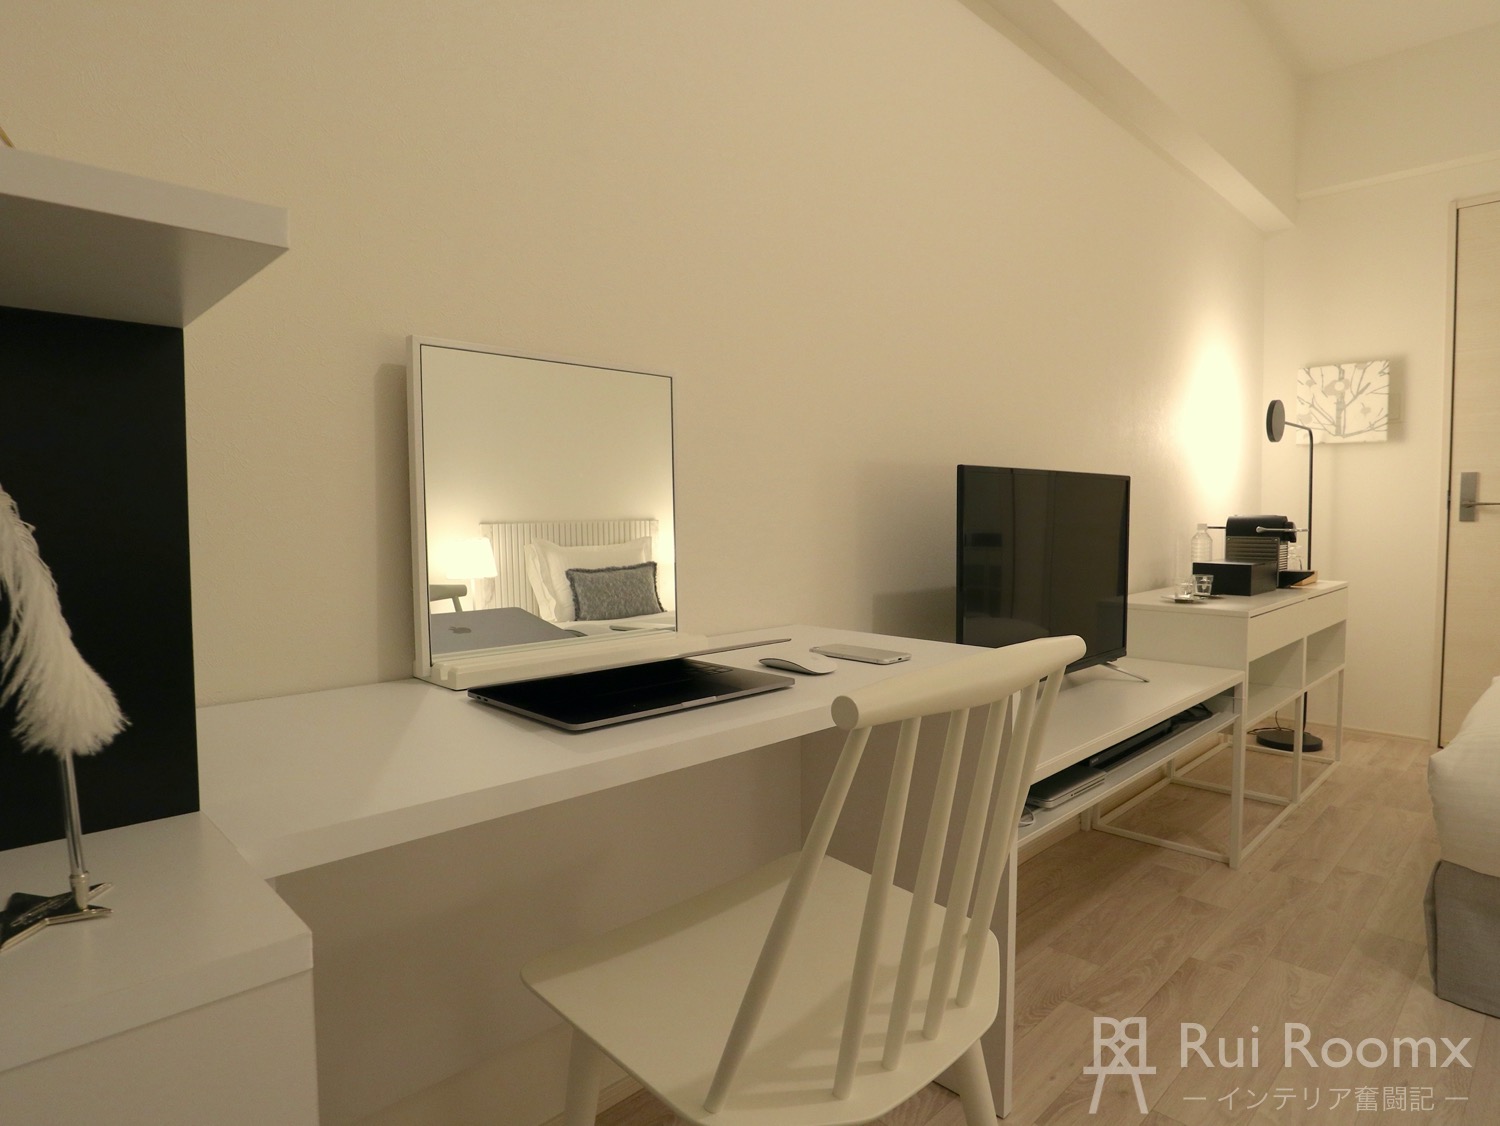 ruiroomx room hotellike-interior night light desk chair